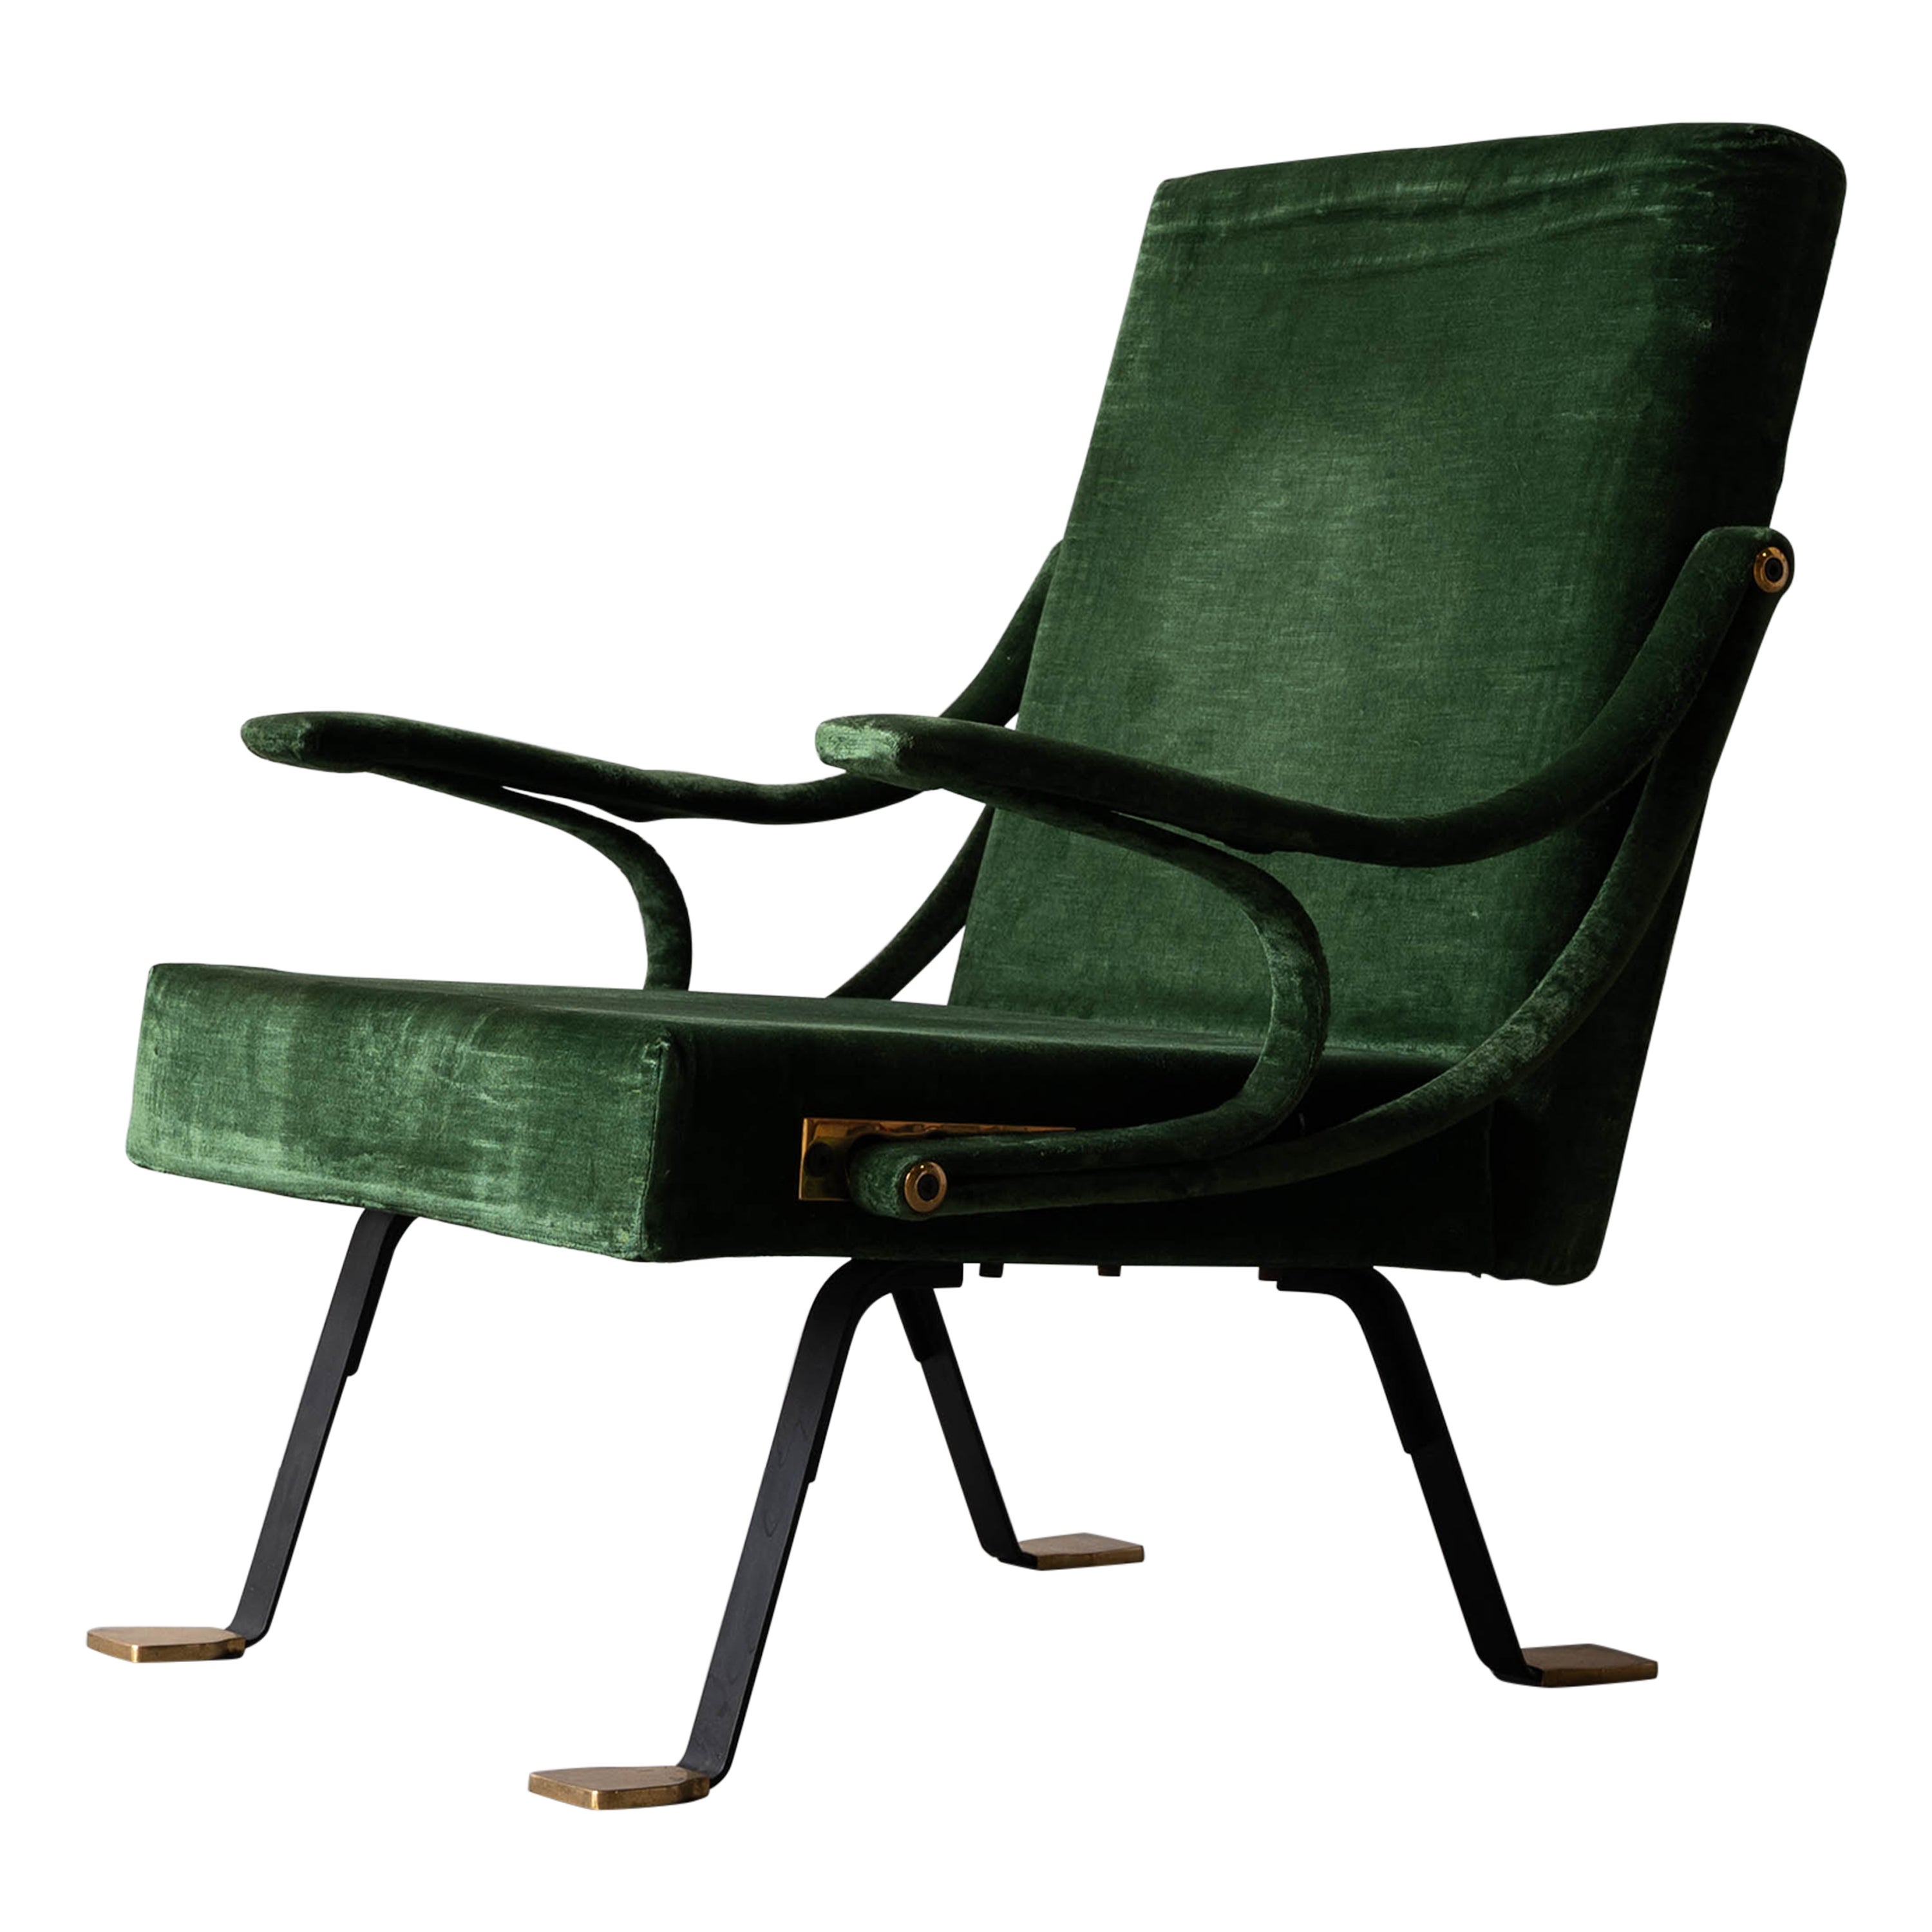 Ignazio Gardella, Lounge Chair, Brass, Metal, Green Velvet, Gavina, Italy, 1957